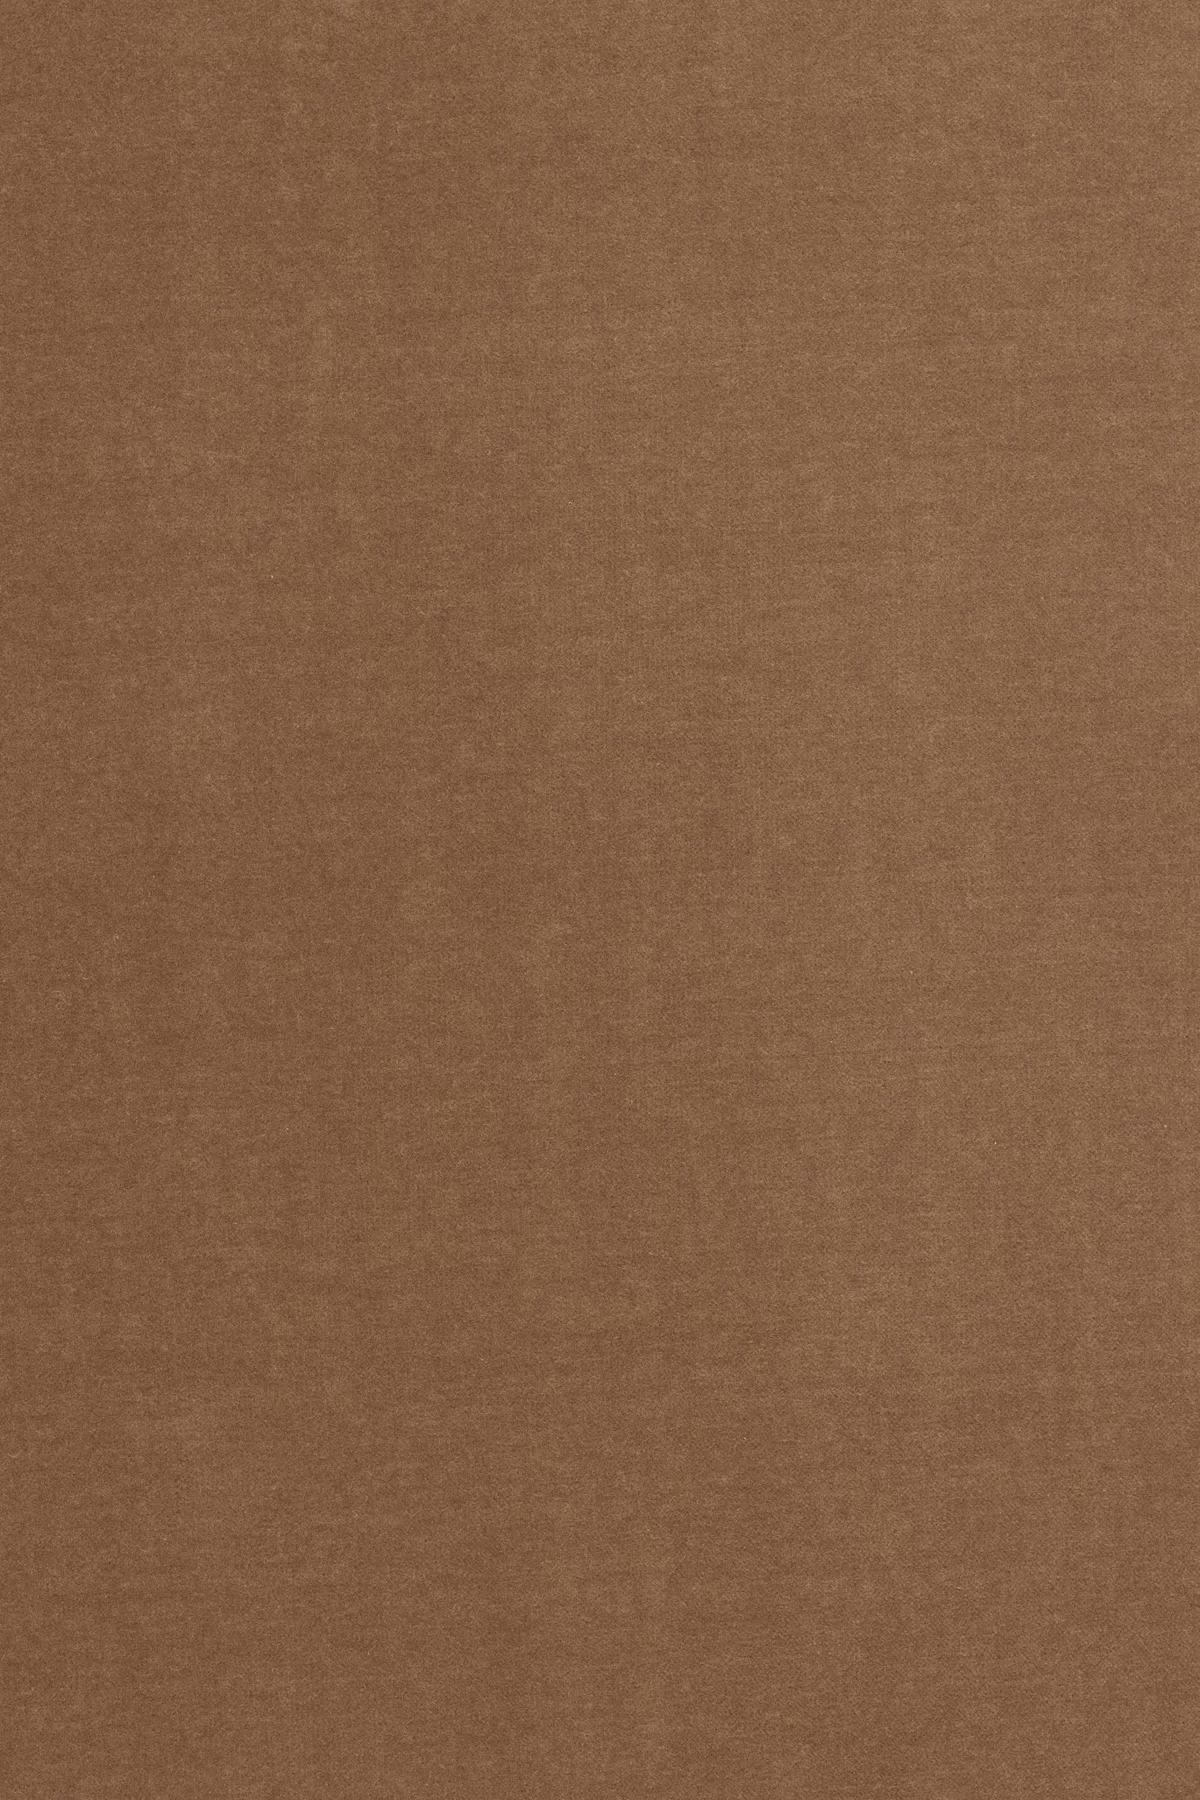 Fabric sample Harald 3 343 brown